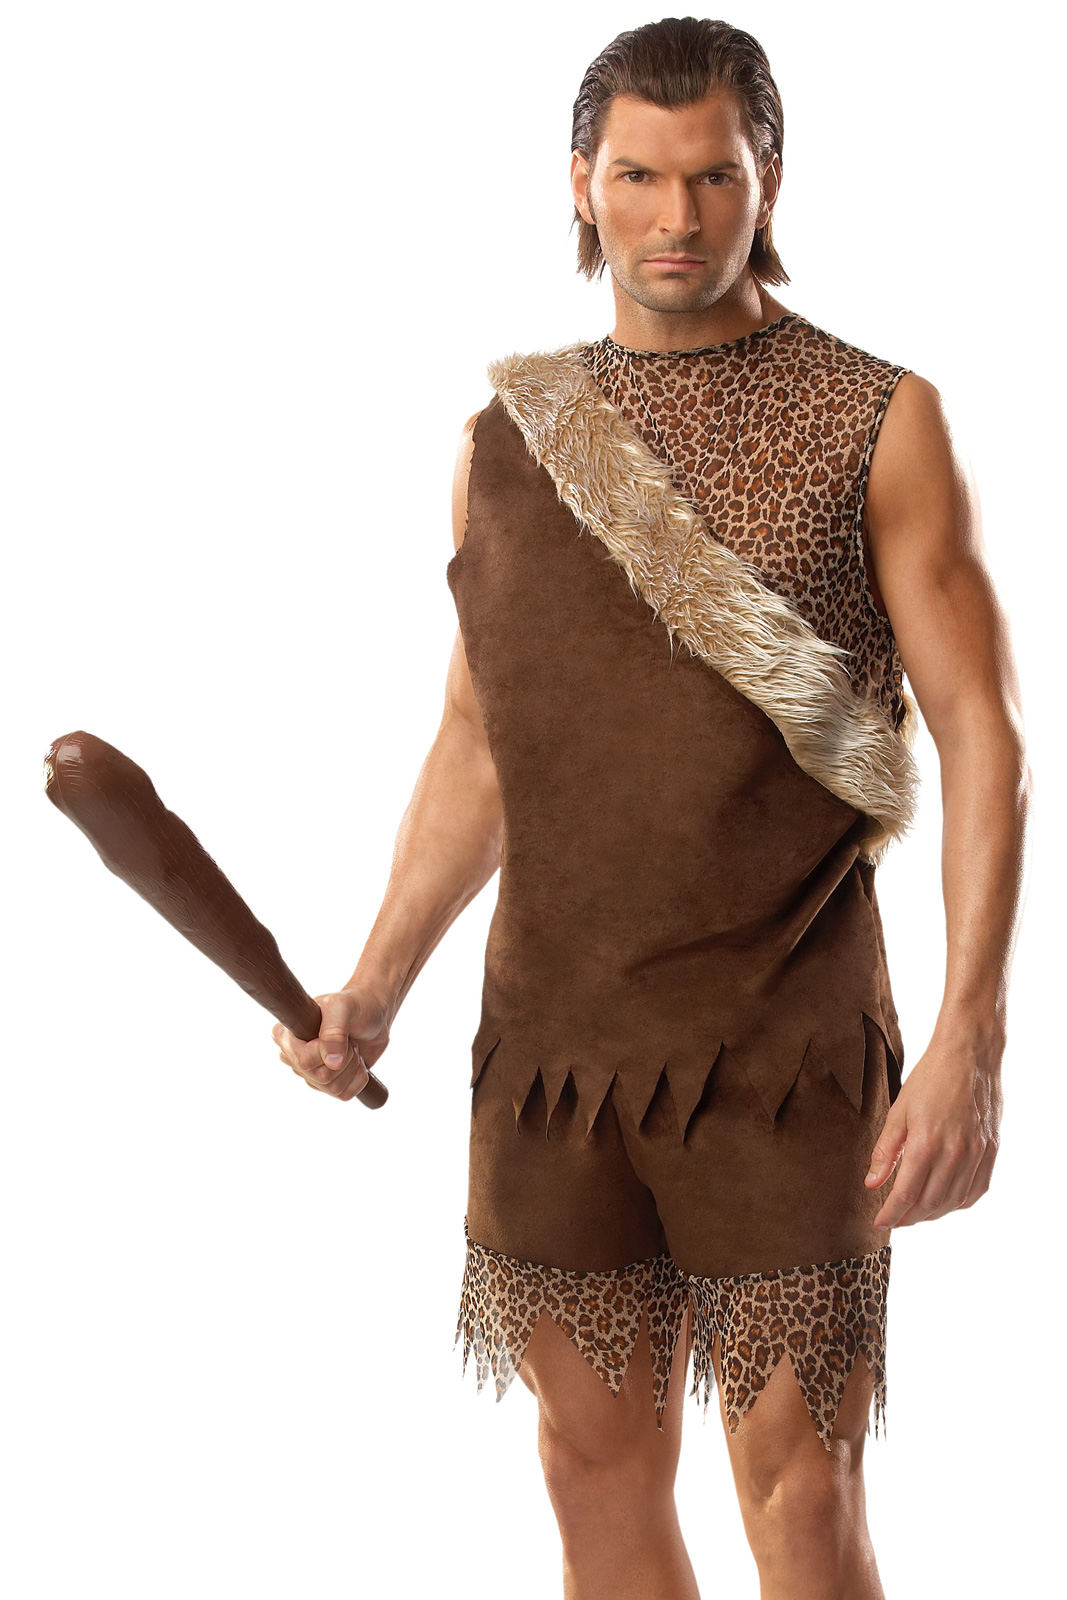 Coquette Men's Cave Man Adult Costume - Large/XLarge